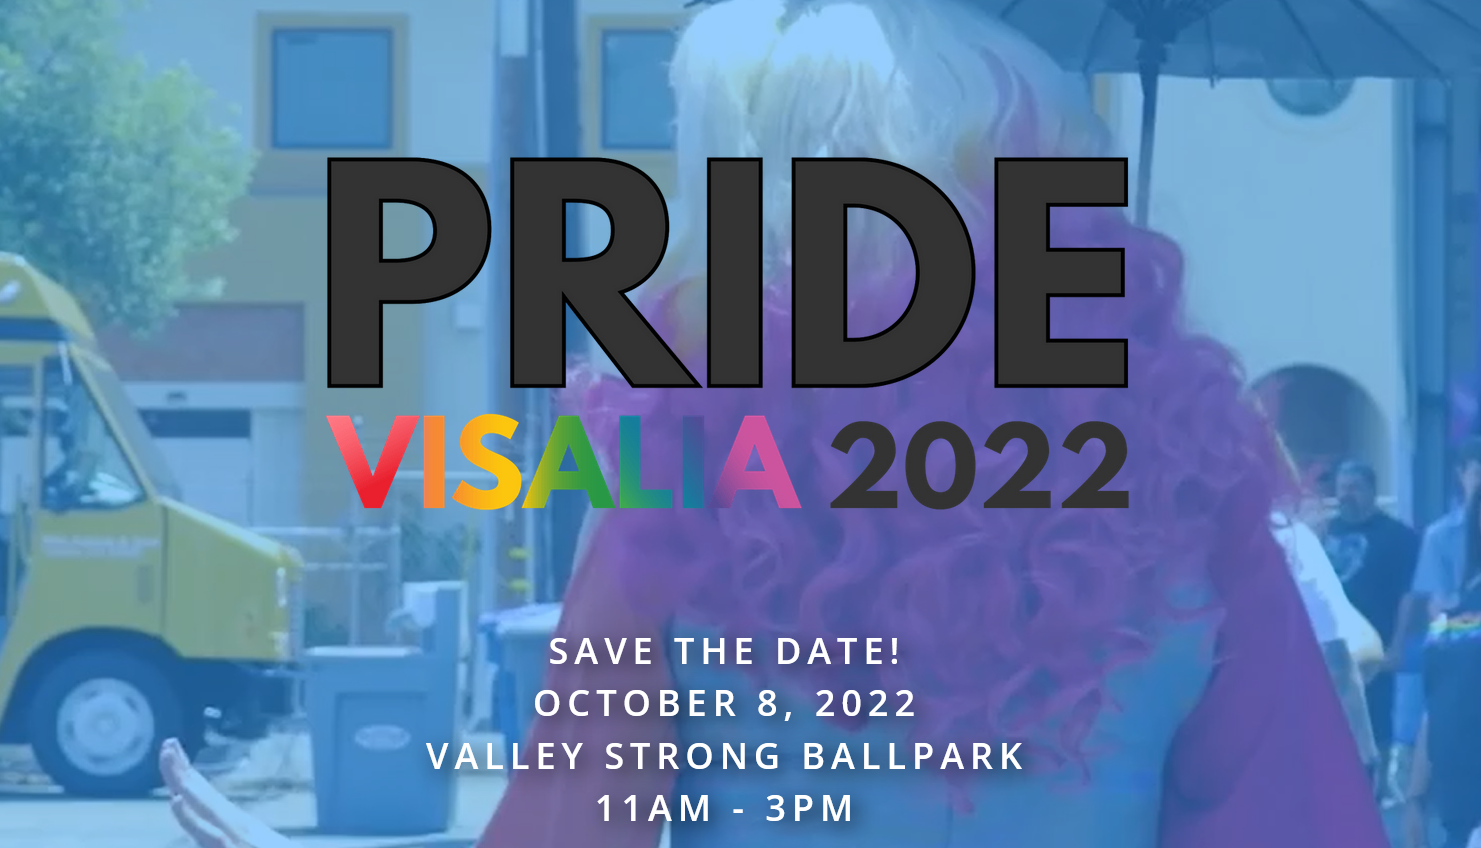 Sixth Annual Visalia Pride this weekend!